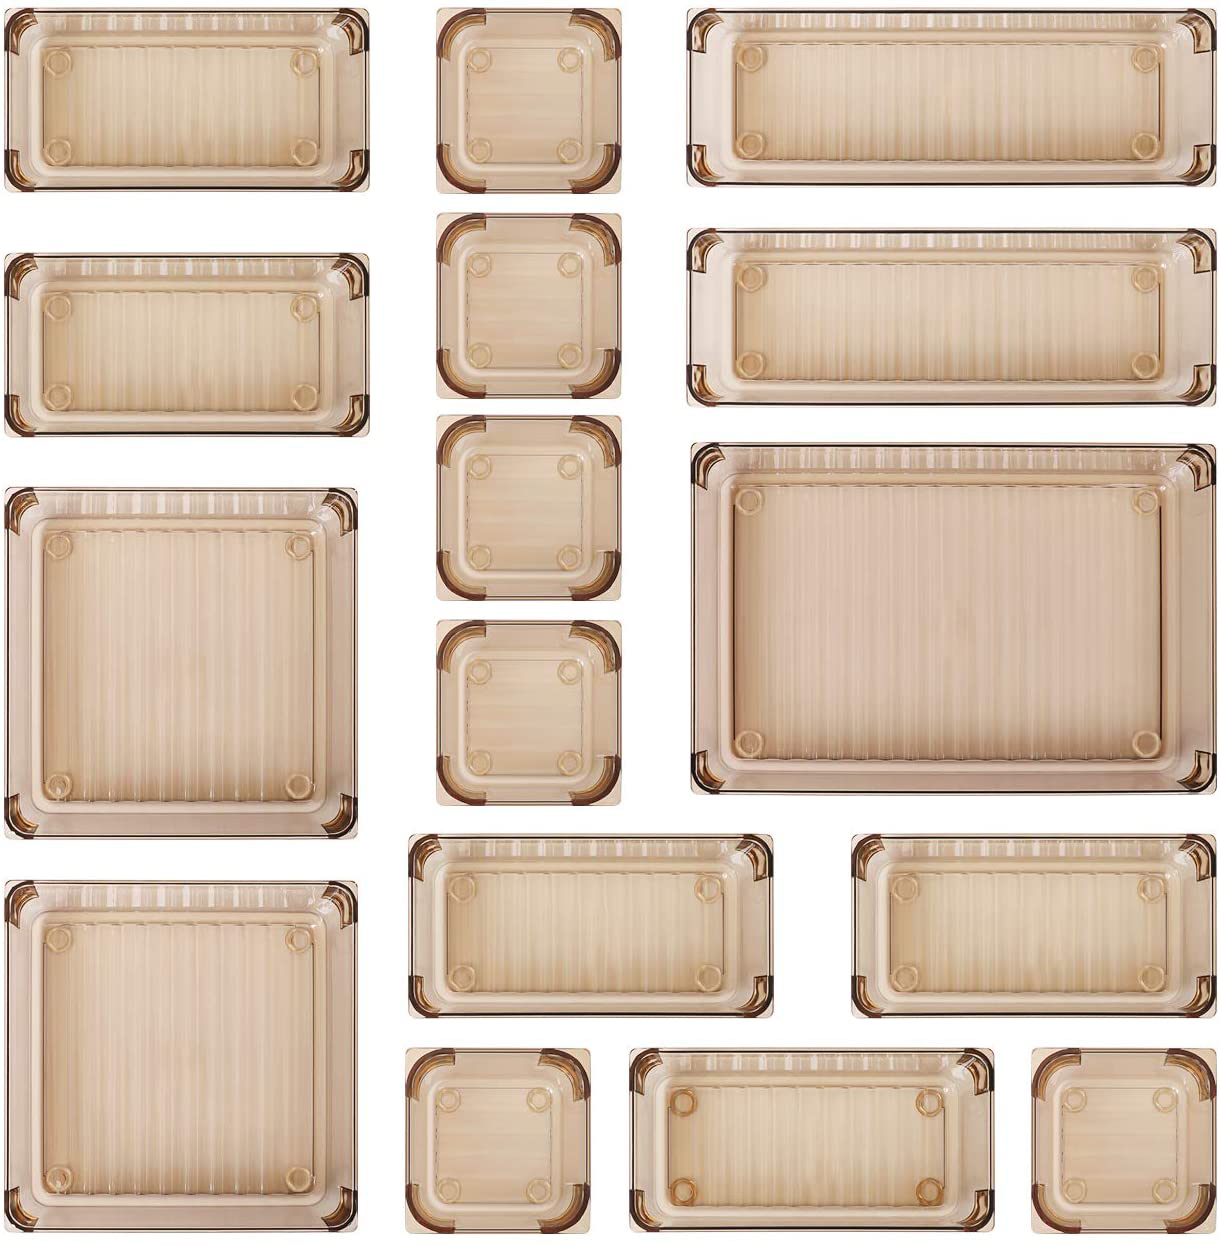 Kootek 16 Pcs Desk Drawer Organizer Set 5-Size Bathroom Drawer Tray Dividers Versatile Storage Bins Plastic Vanity Trays Organizers Divider Container for Dresser Makeup Kitchen Utensil Office